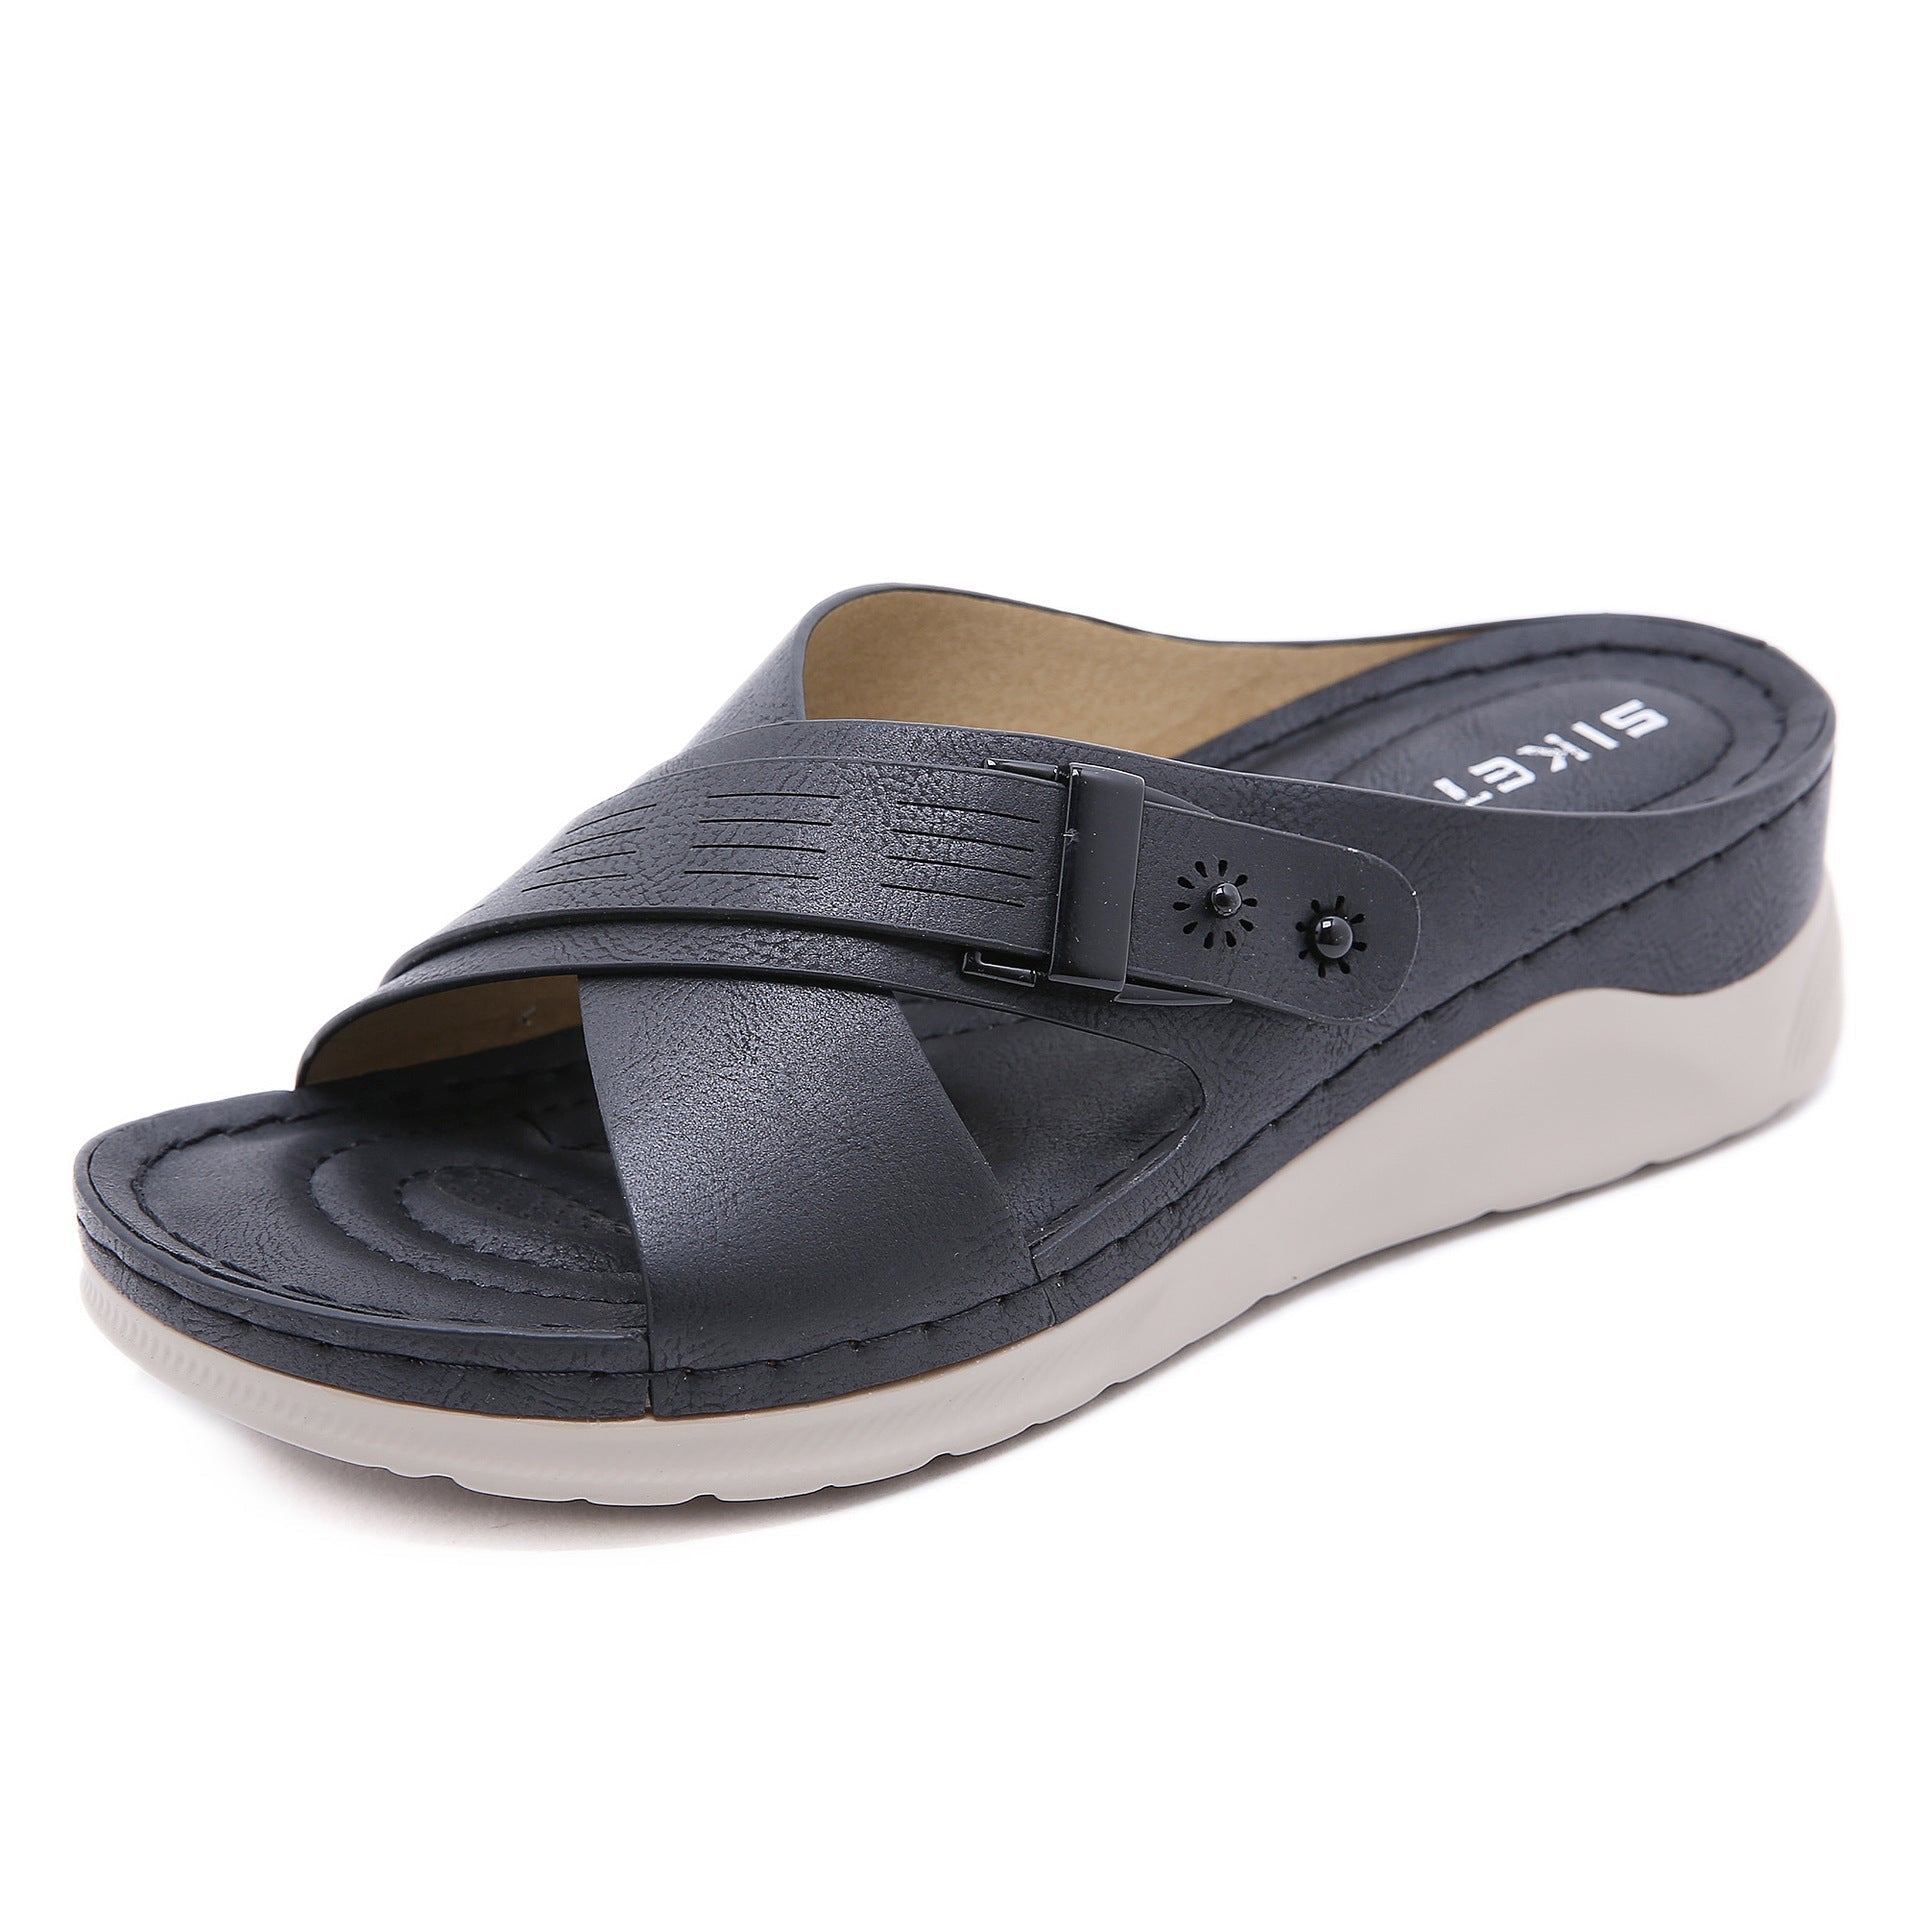 Summer Comfortable Lightweight Fashion Slippers